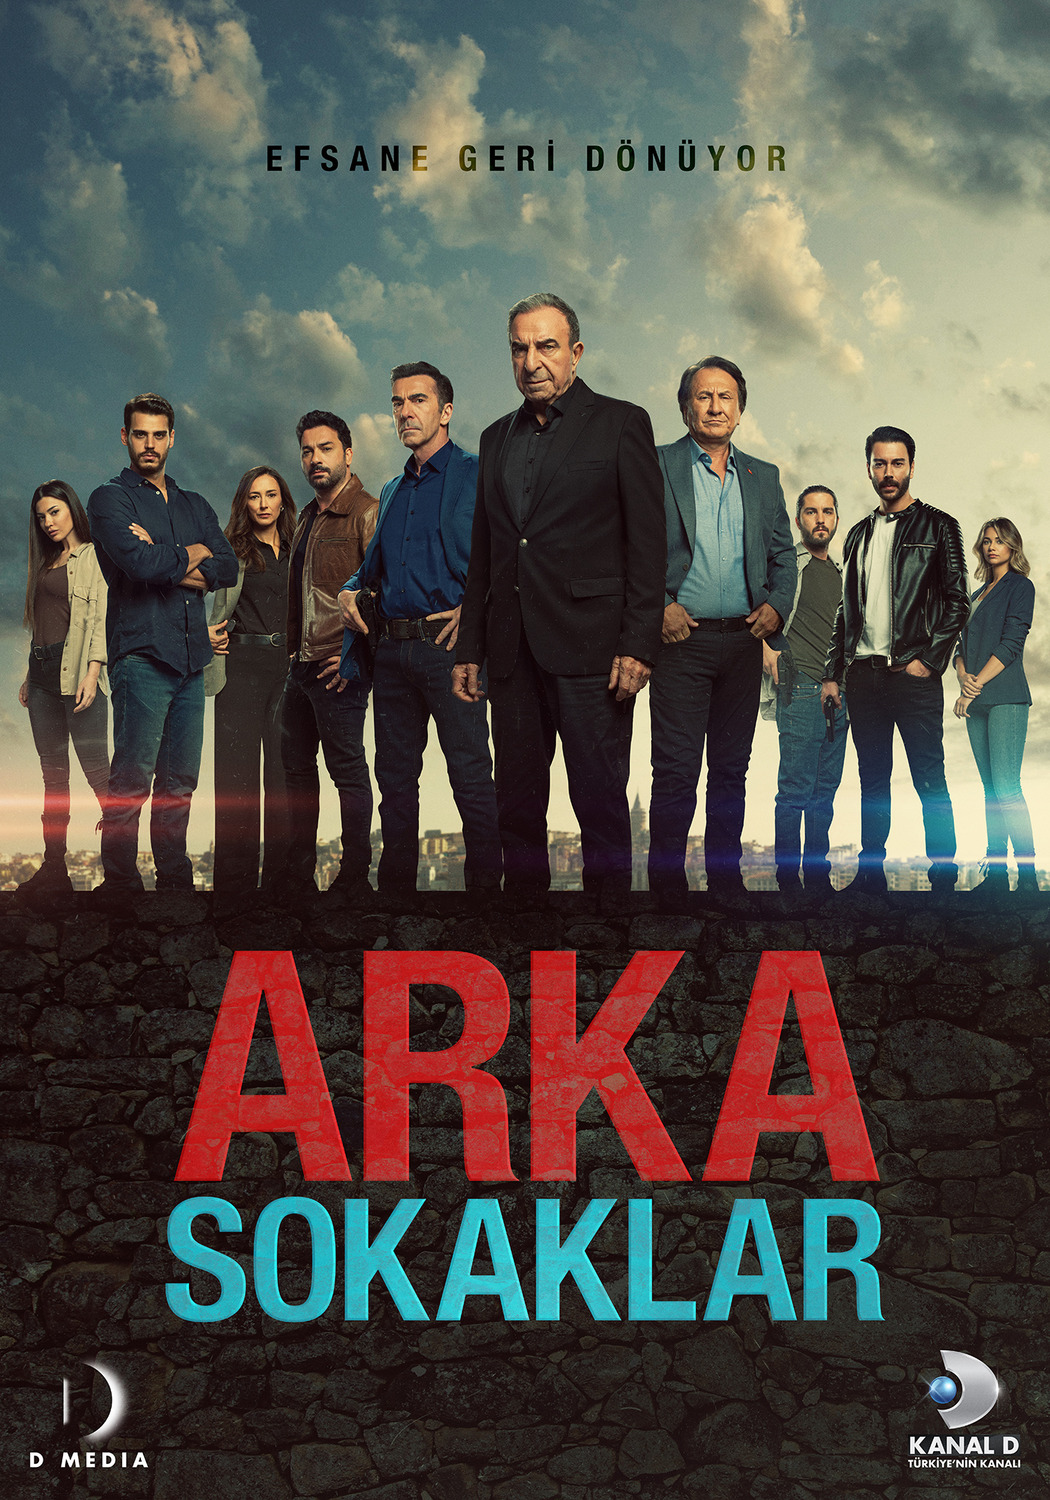 Extra Large TV Poster Image for Arka sokaklar (#10 of 11)